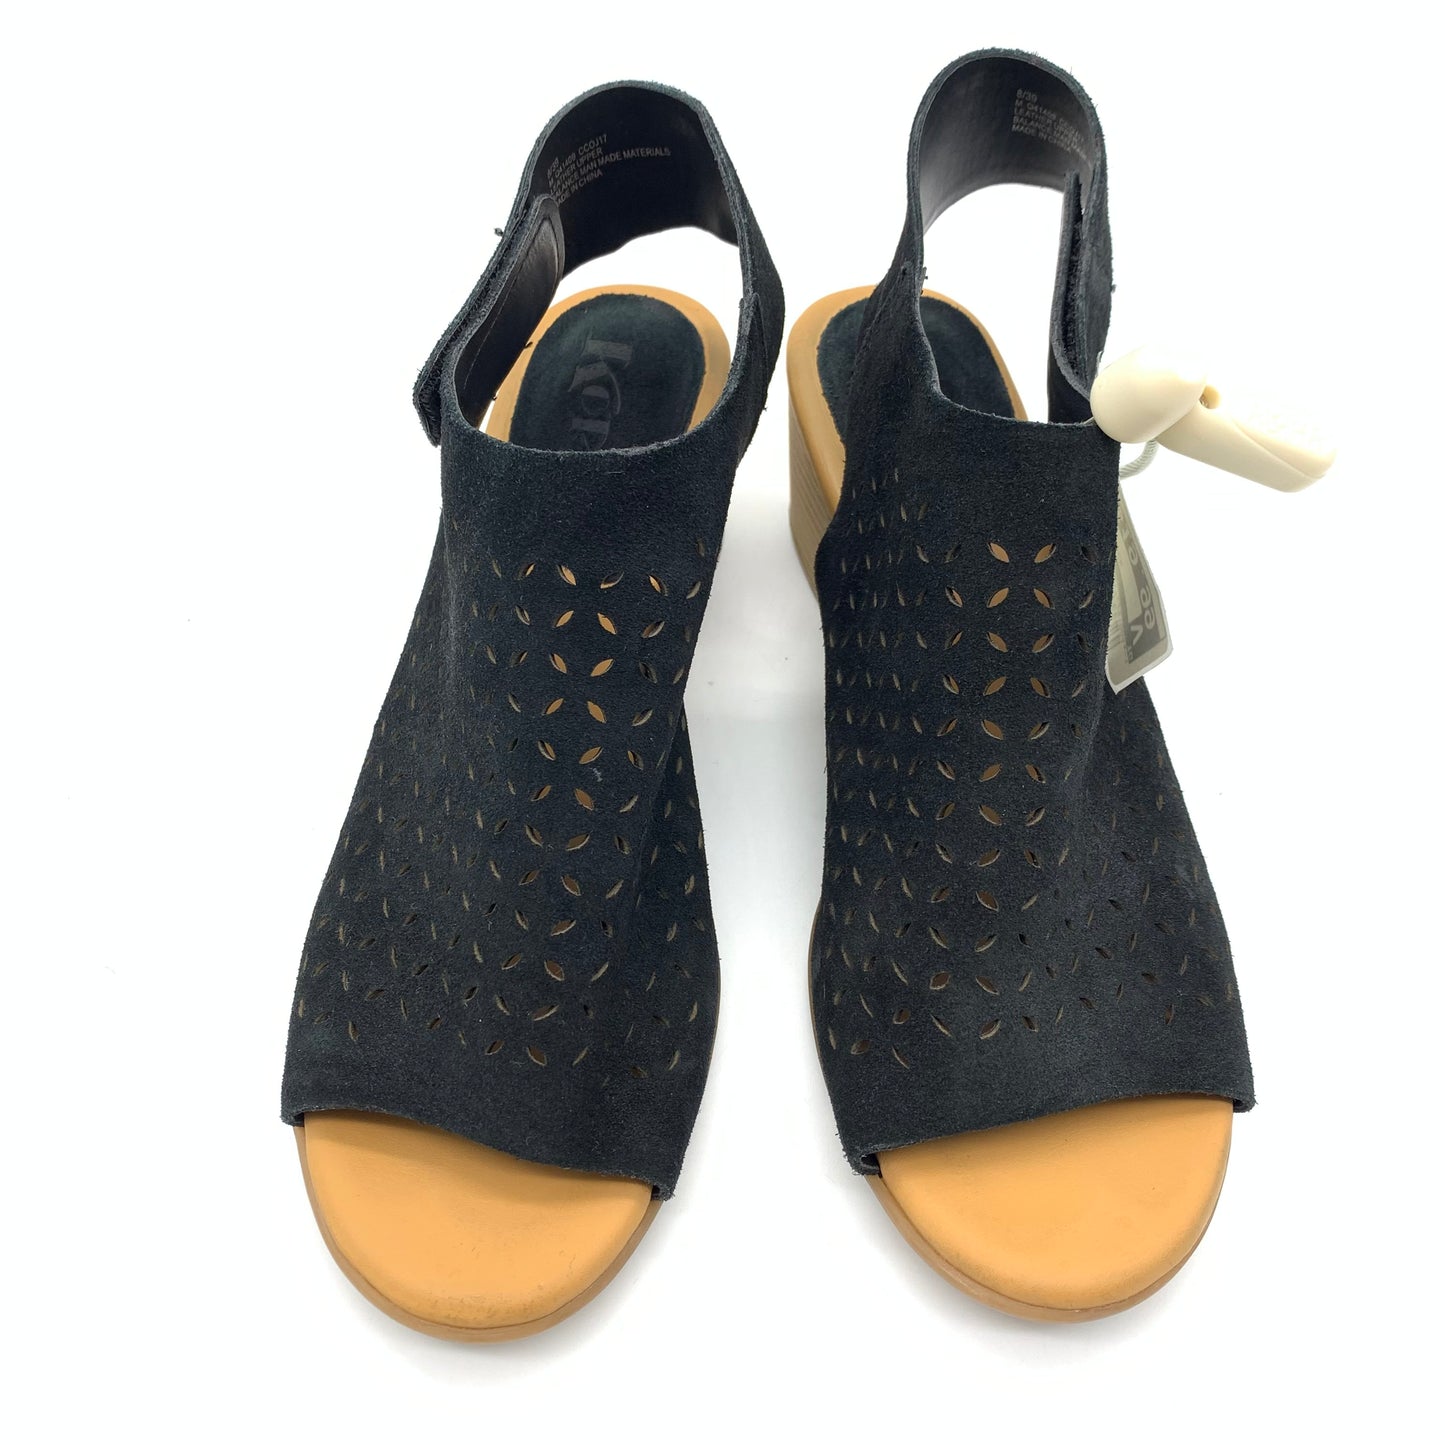 Sandals Heels Block By Korks  Size: 8